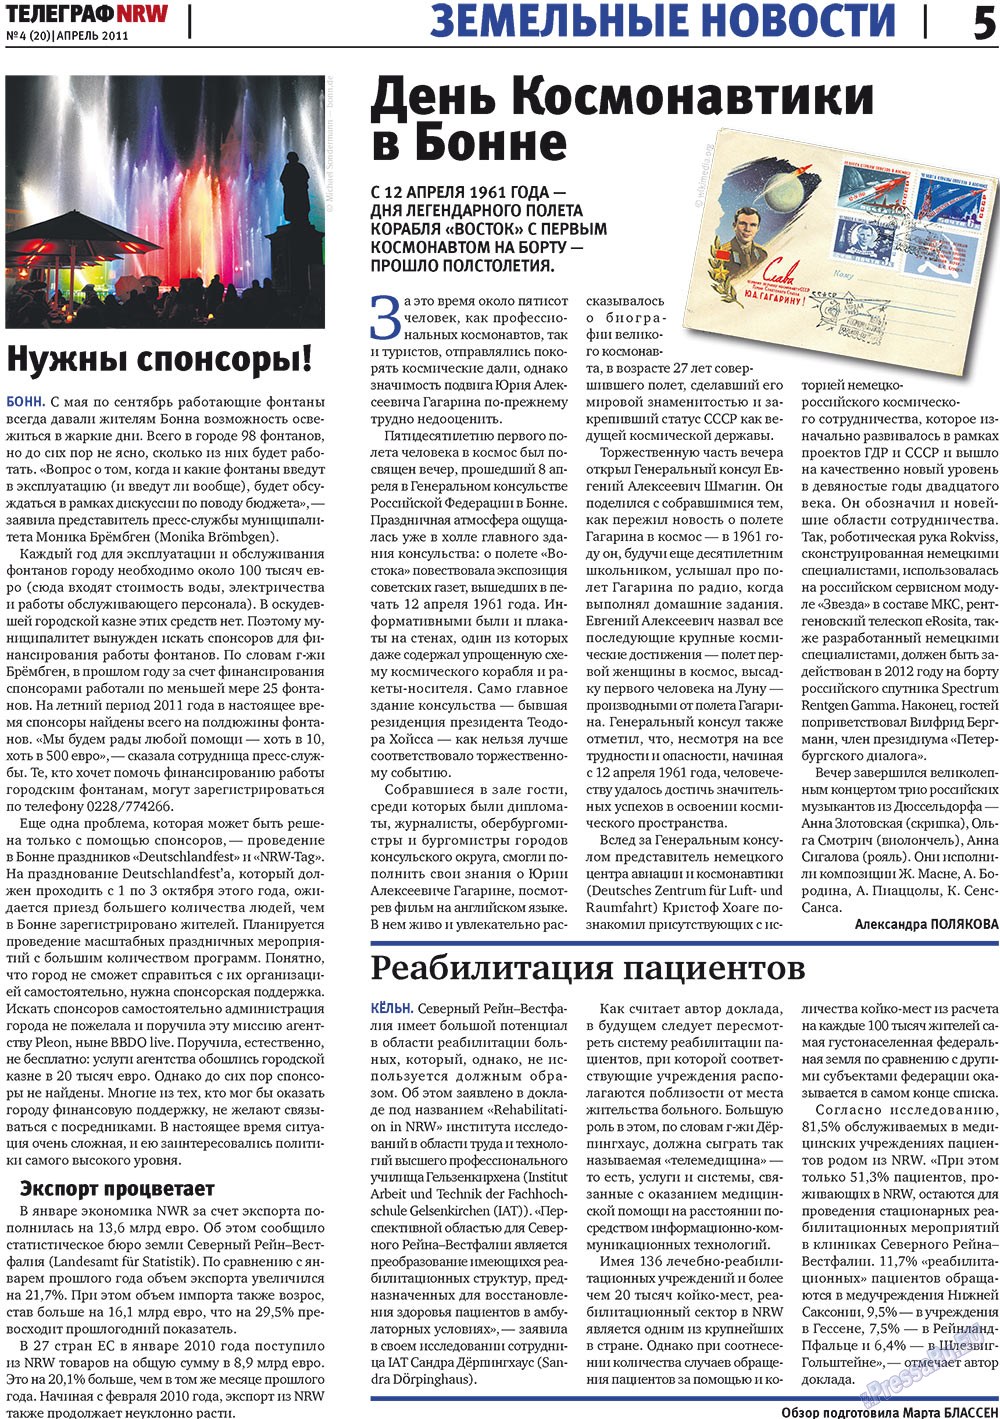 Телеграф NRW, газета. 2011 №4 стр.5